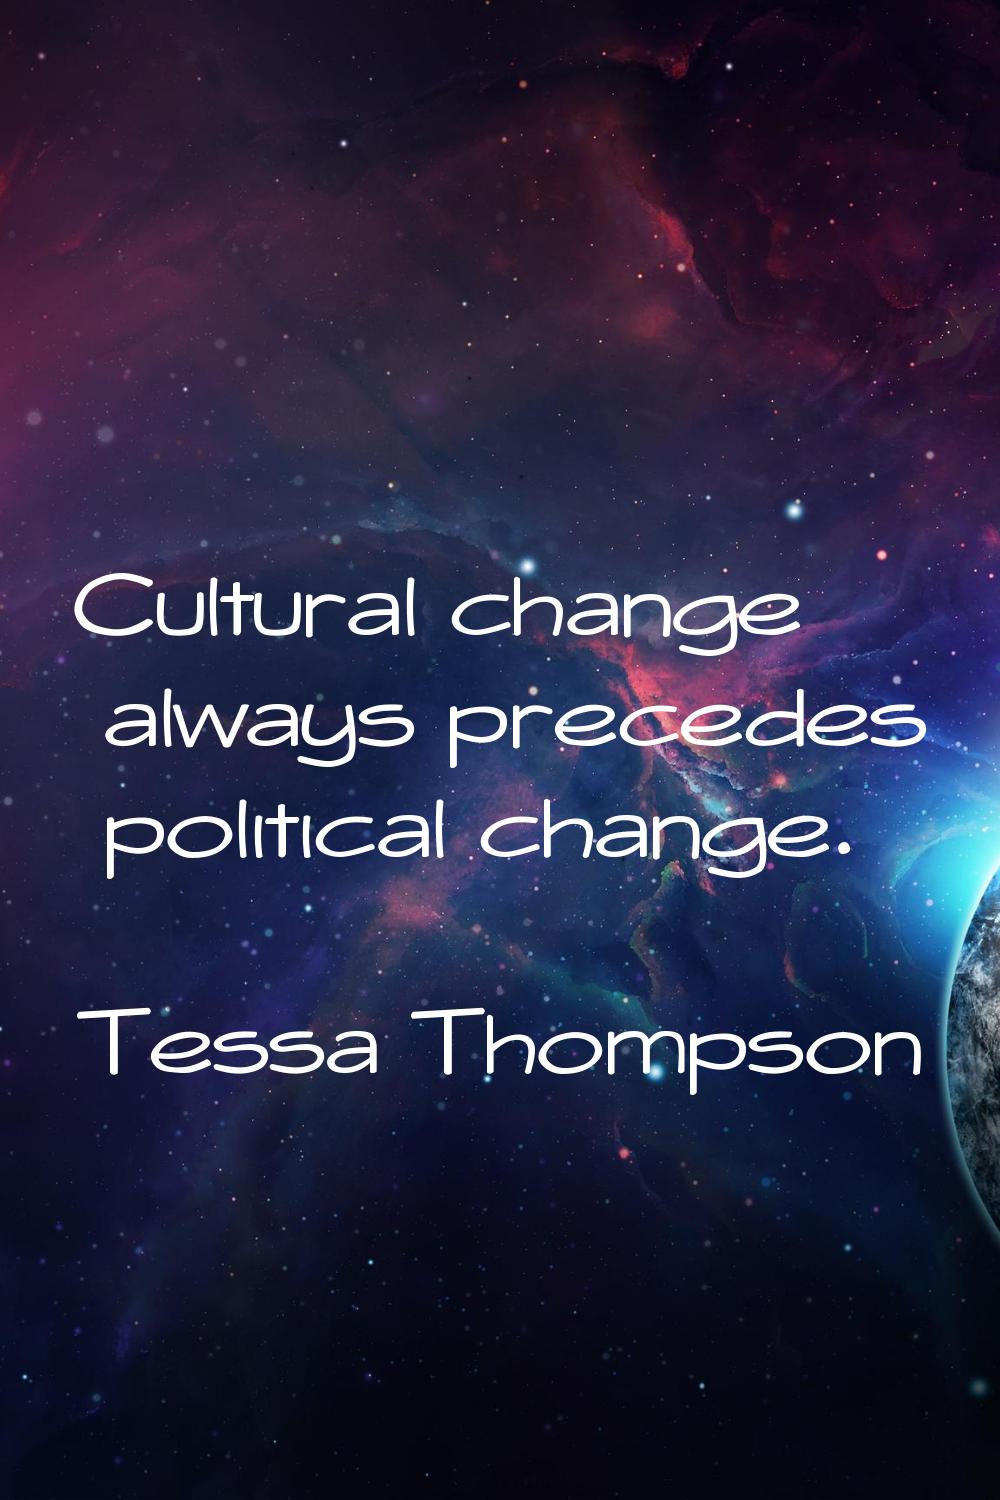 Cultural change always precedes political change.